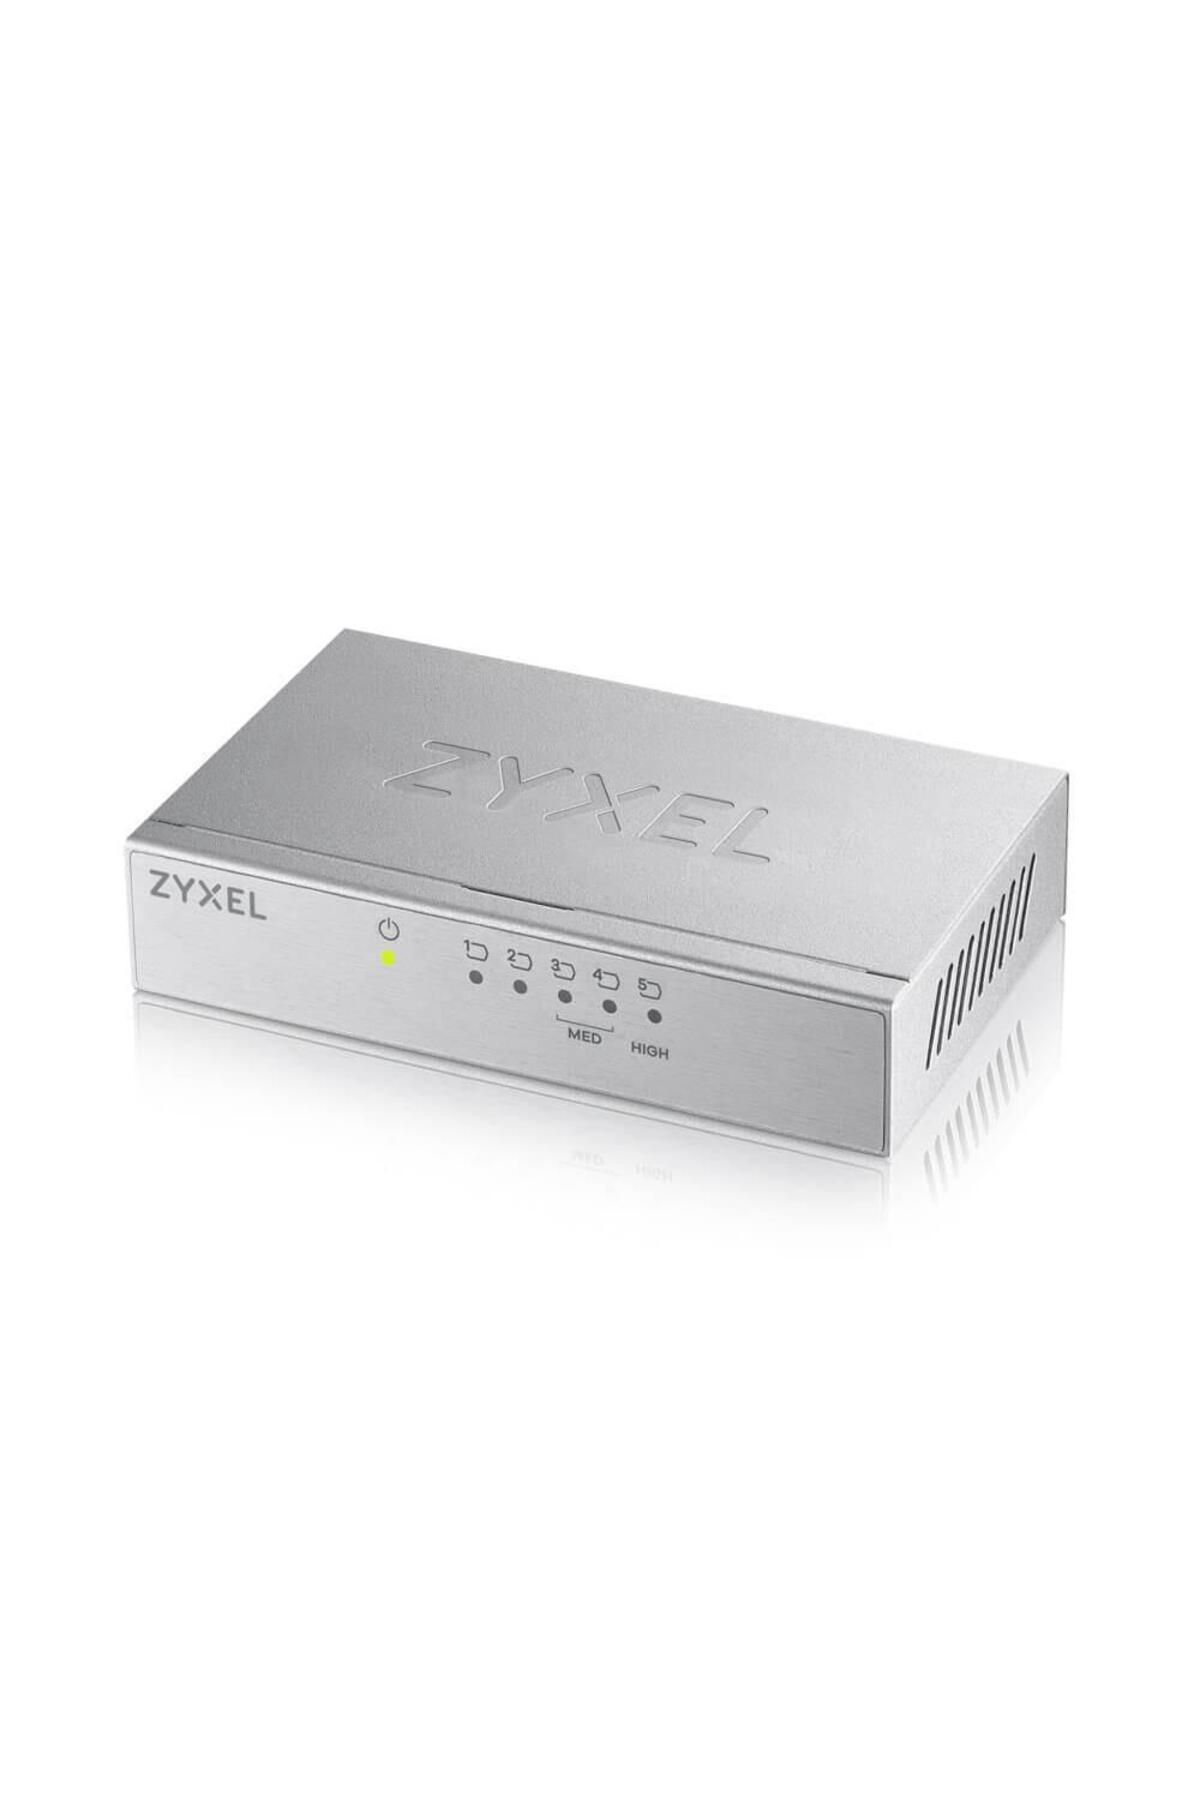 Zyxel Gs-105b 5 Port 10/100/1000 Mbps Metal Kasa Switch